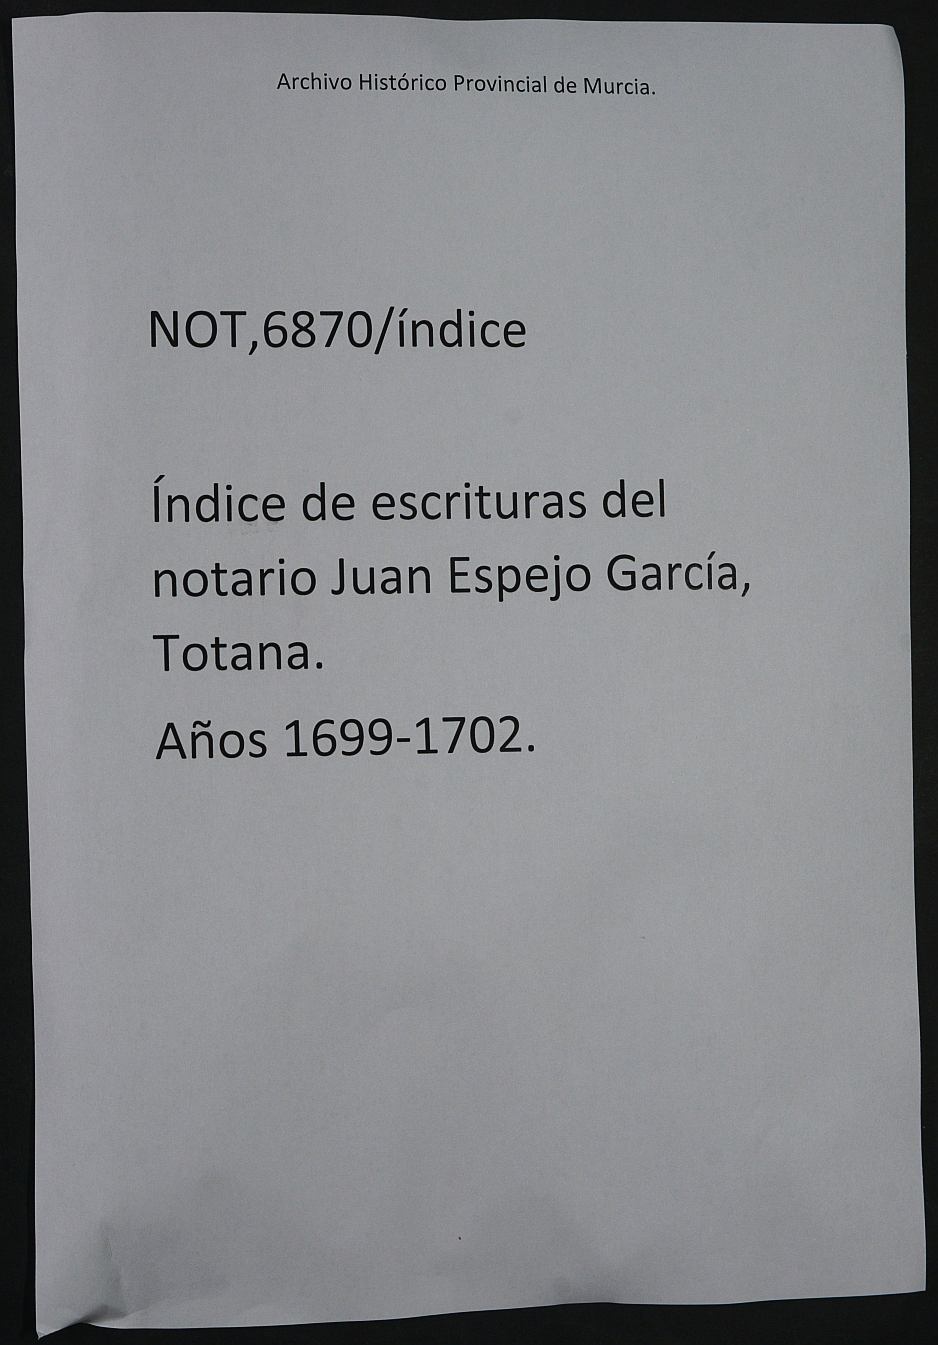 Registro de Juan Espejo García, Totana, de 1699-1702.